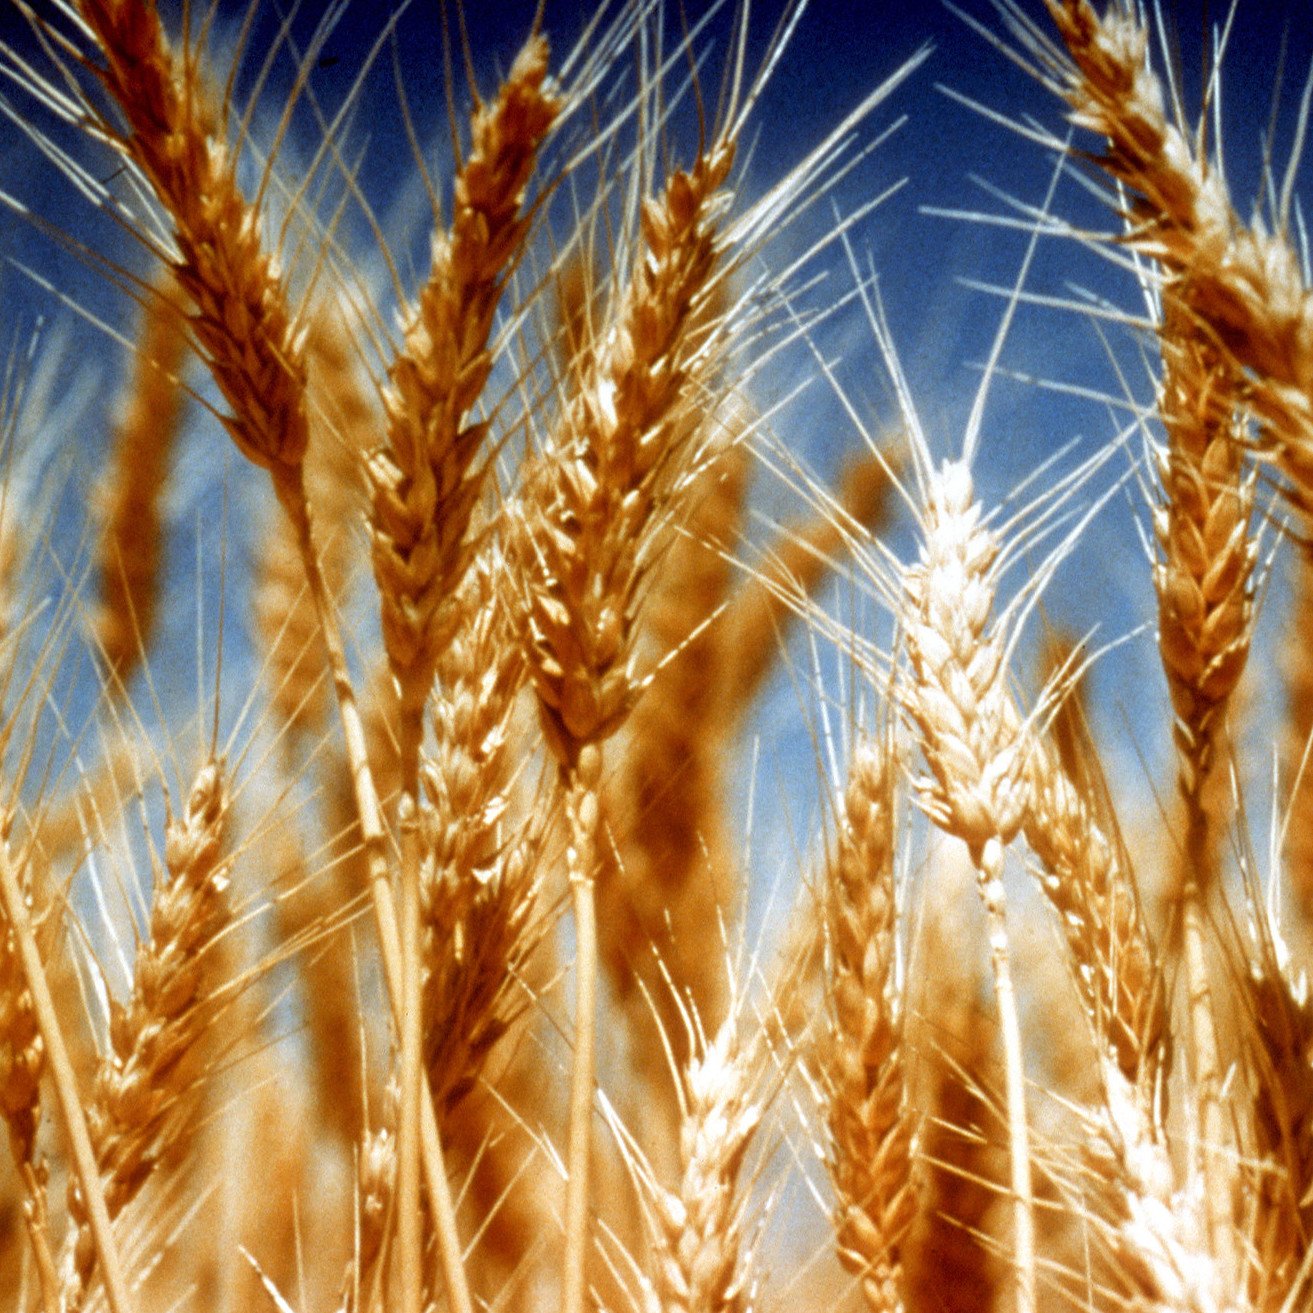 RS920_BP0197-lpr-Graincast-hero-wheat-image.jpeg